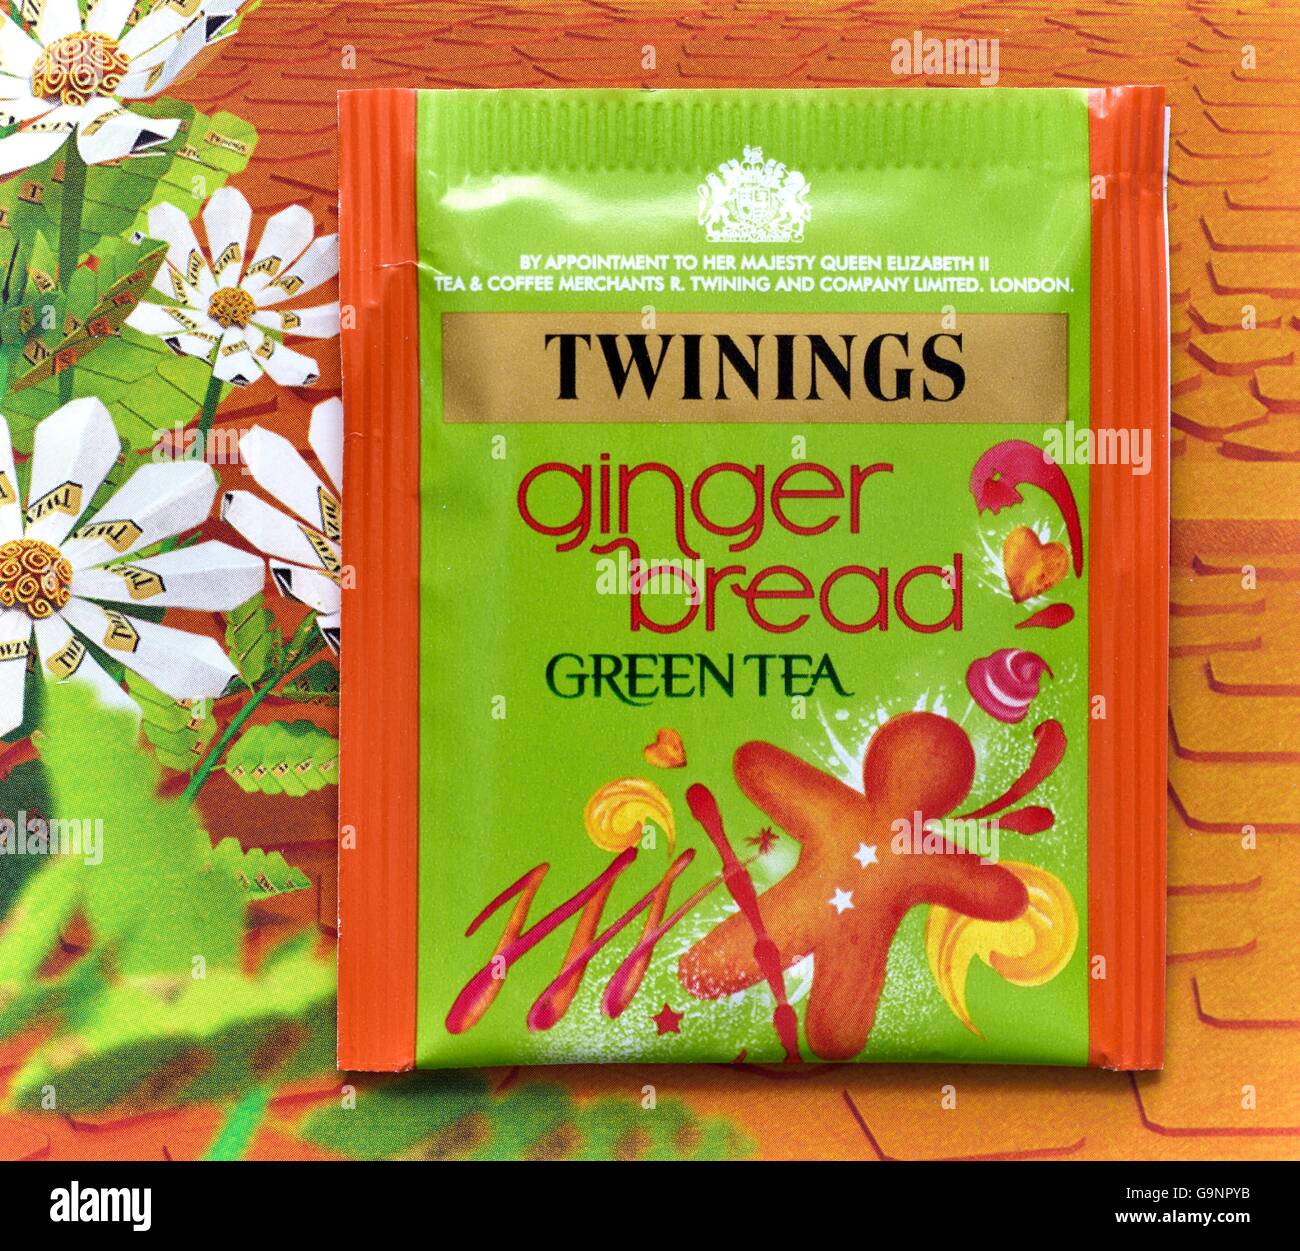 Twinings ginger bread green tea Stock Photo